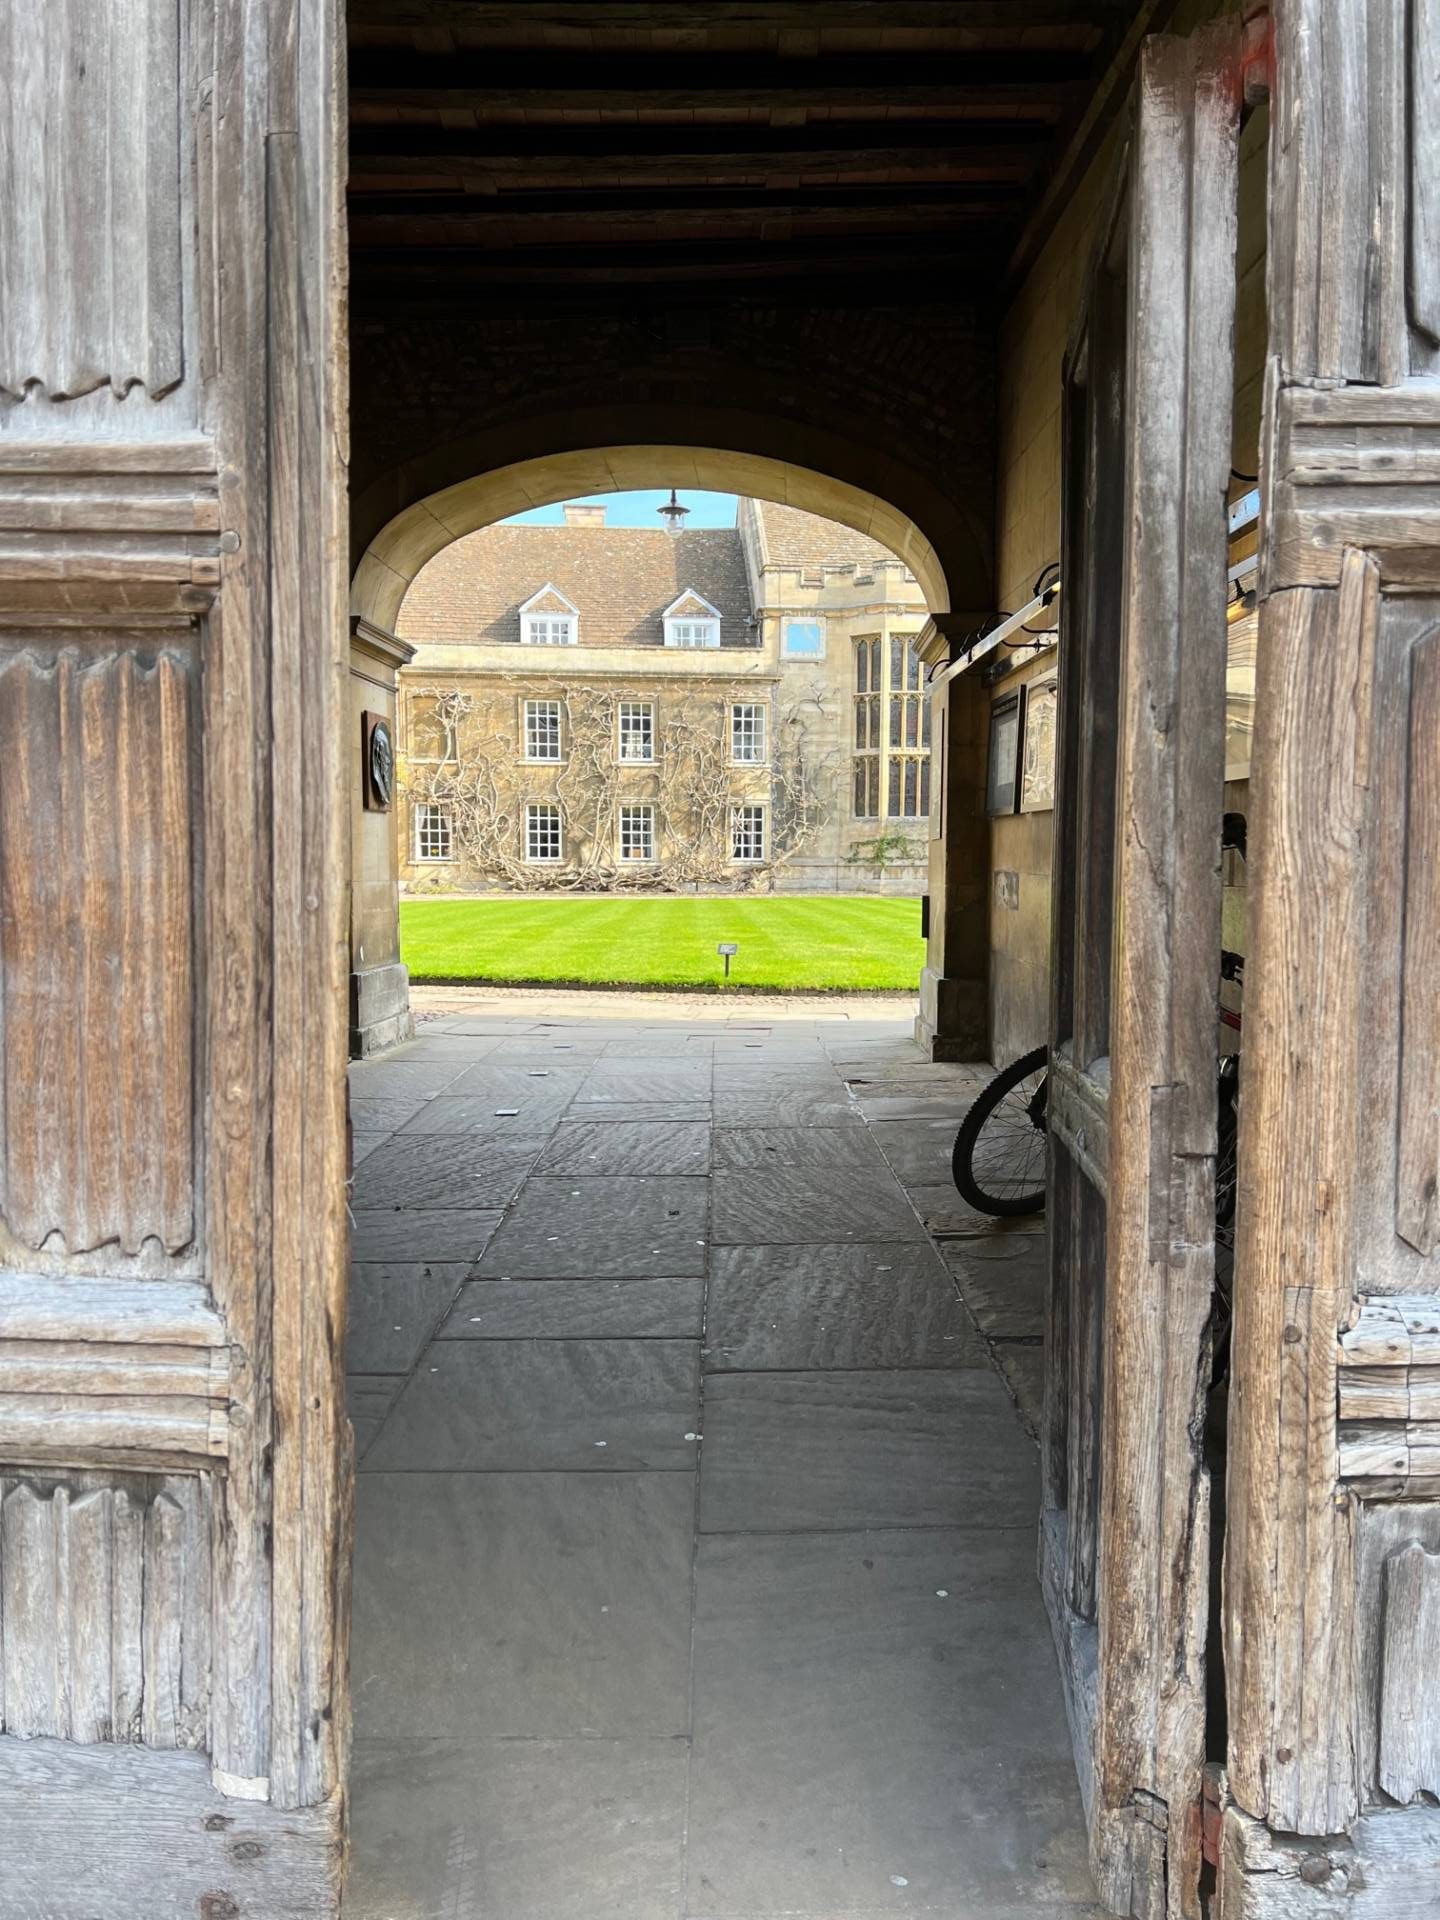 Open doorway to medieval grassed courtyard